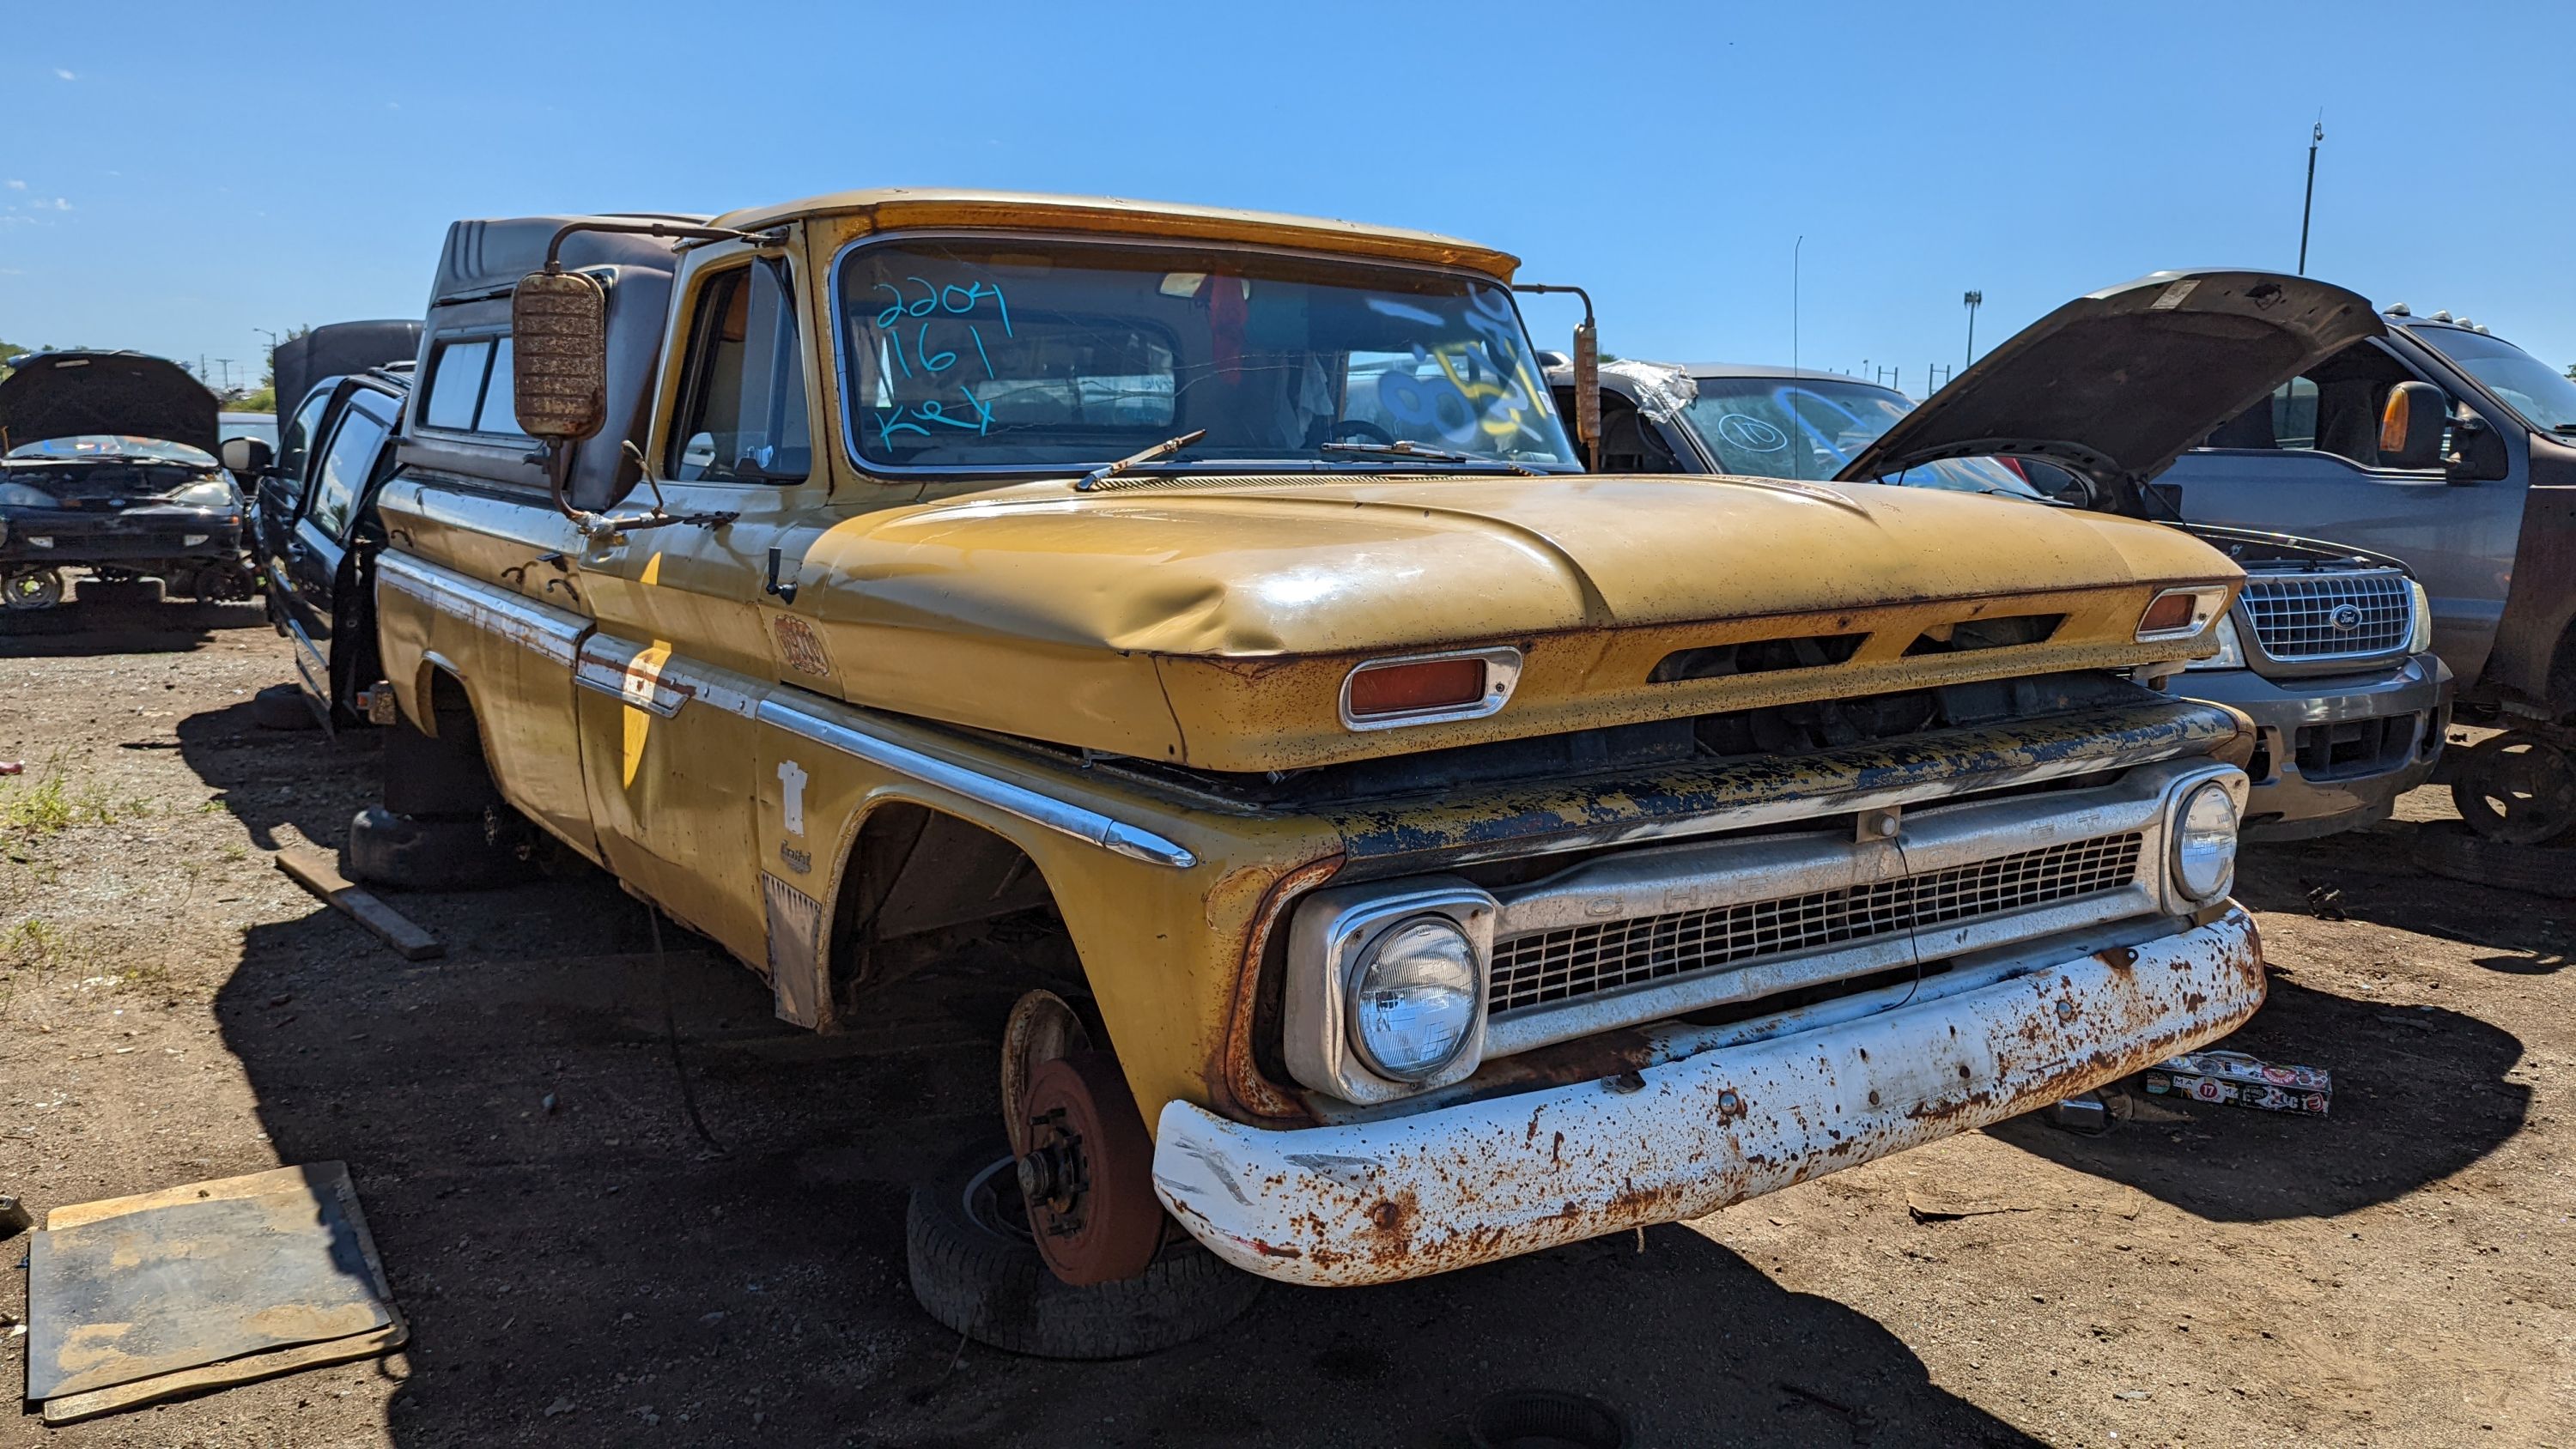 57 - 1964 Chevrolet C20 Pickup in Colorado junkyard - Photo by Murilee Martin